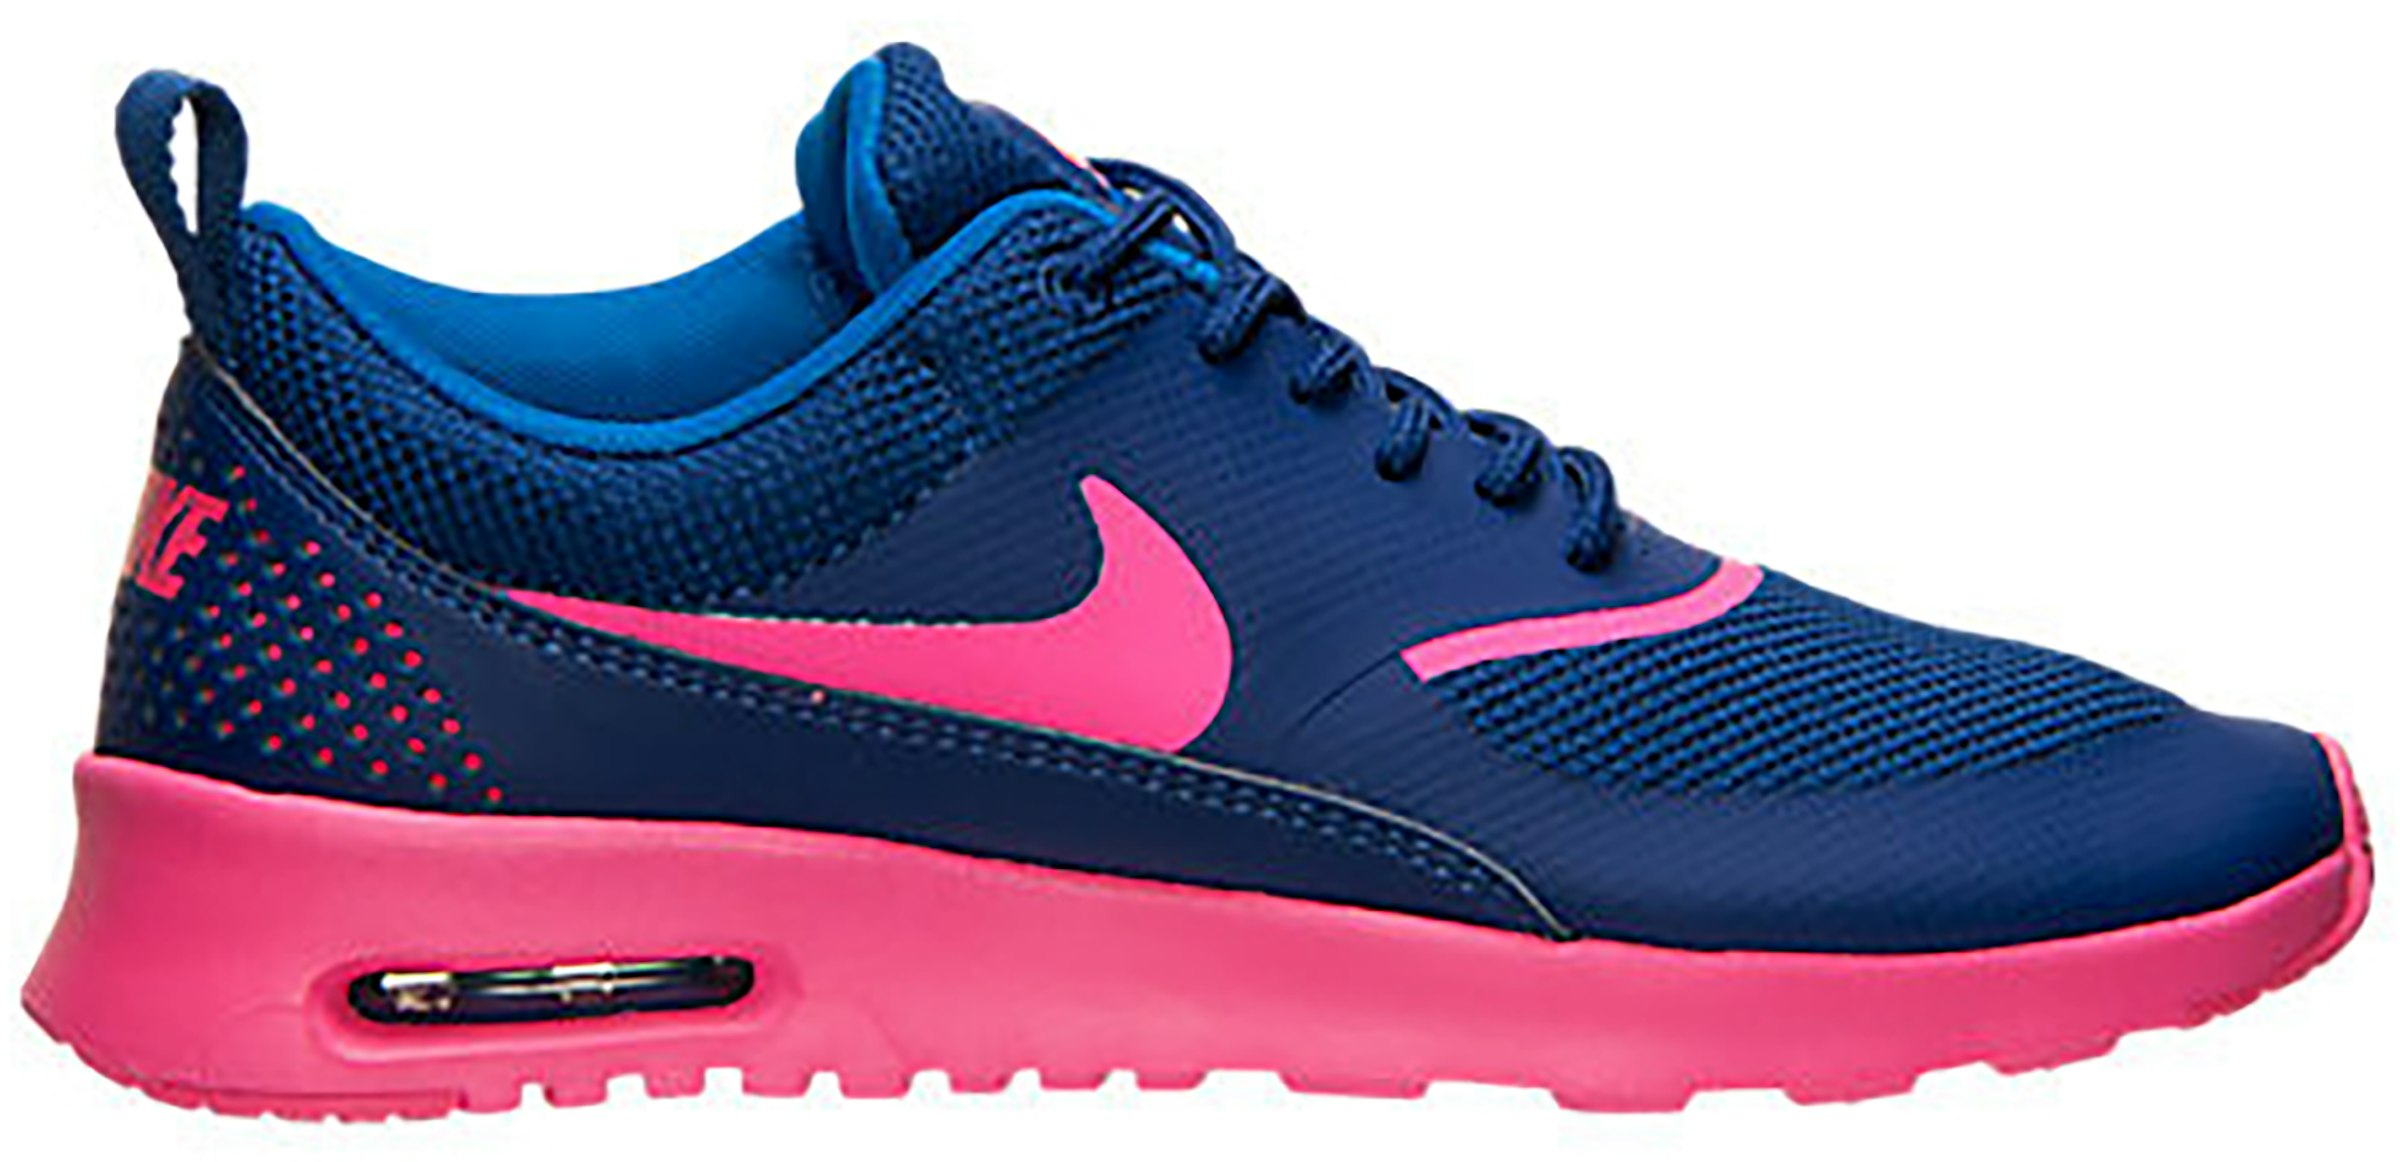 Correlaat erven prieel Nike Air Max Thea Deep Royal Blue Hyper Pink (Women's) - 599409-405 - US